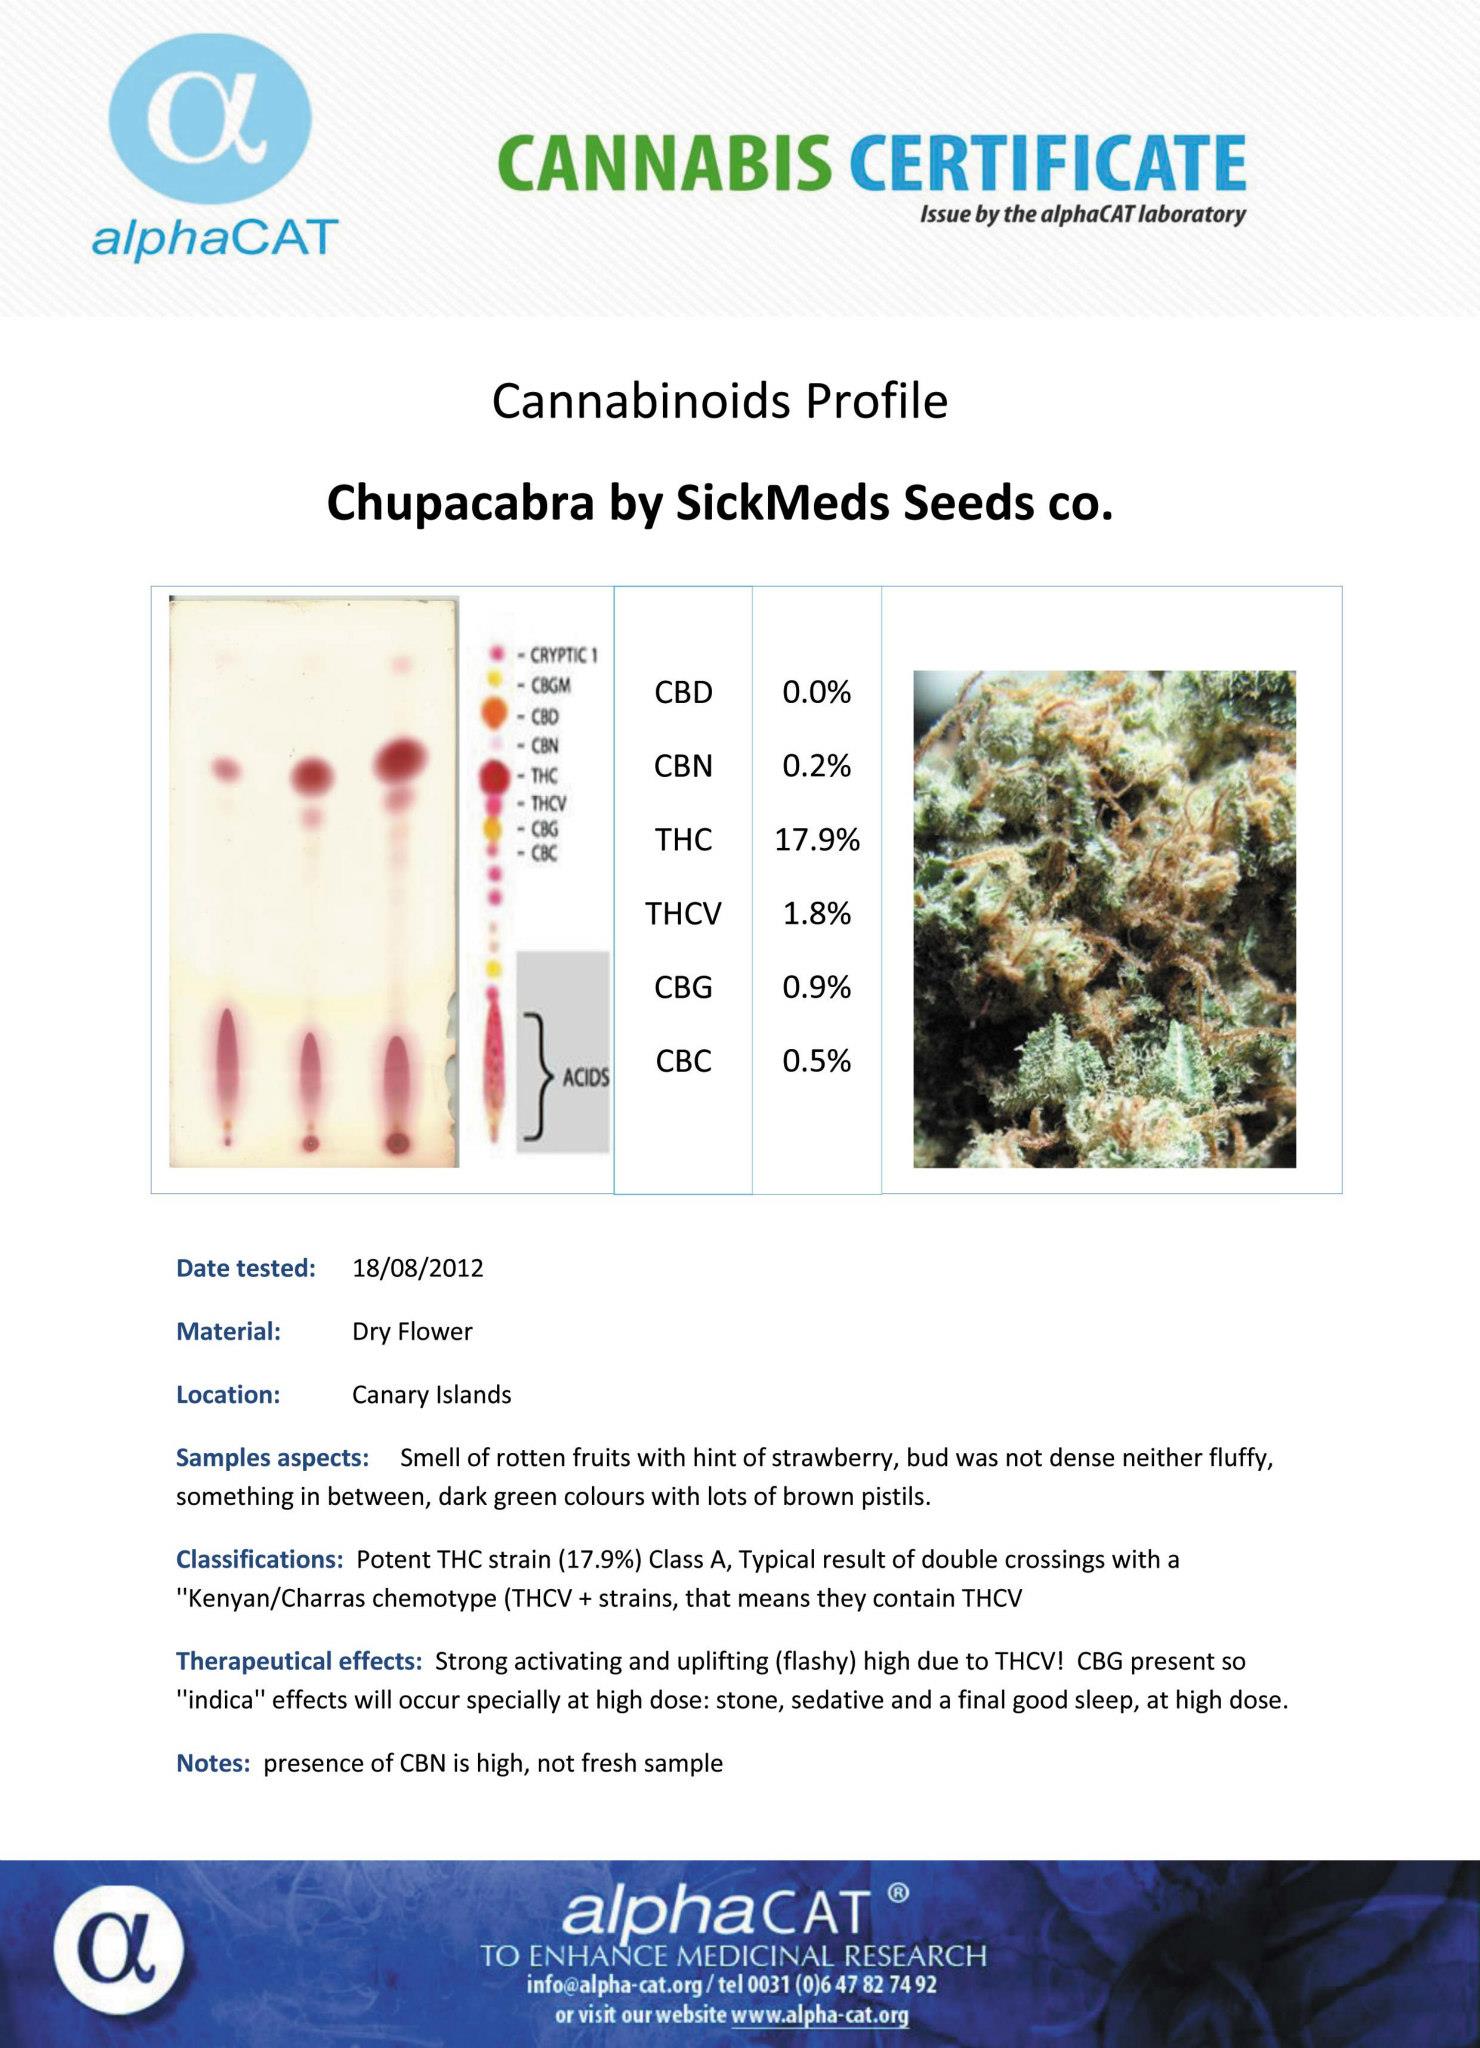 Chupacabra Feminized Marijuana Seeds